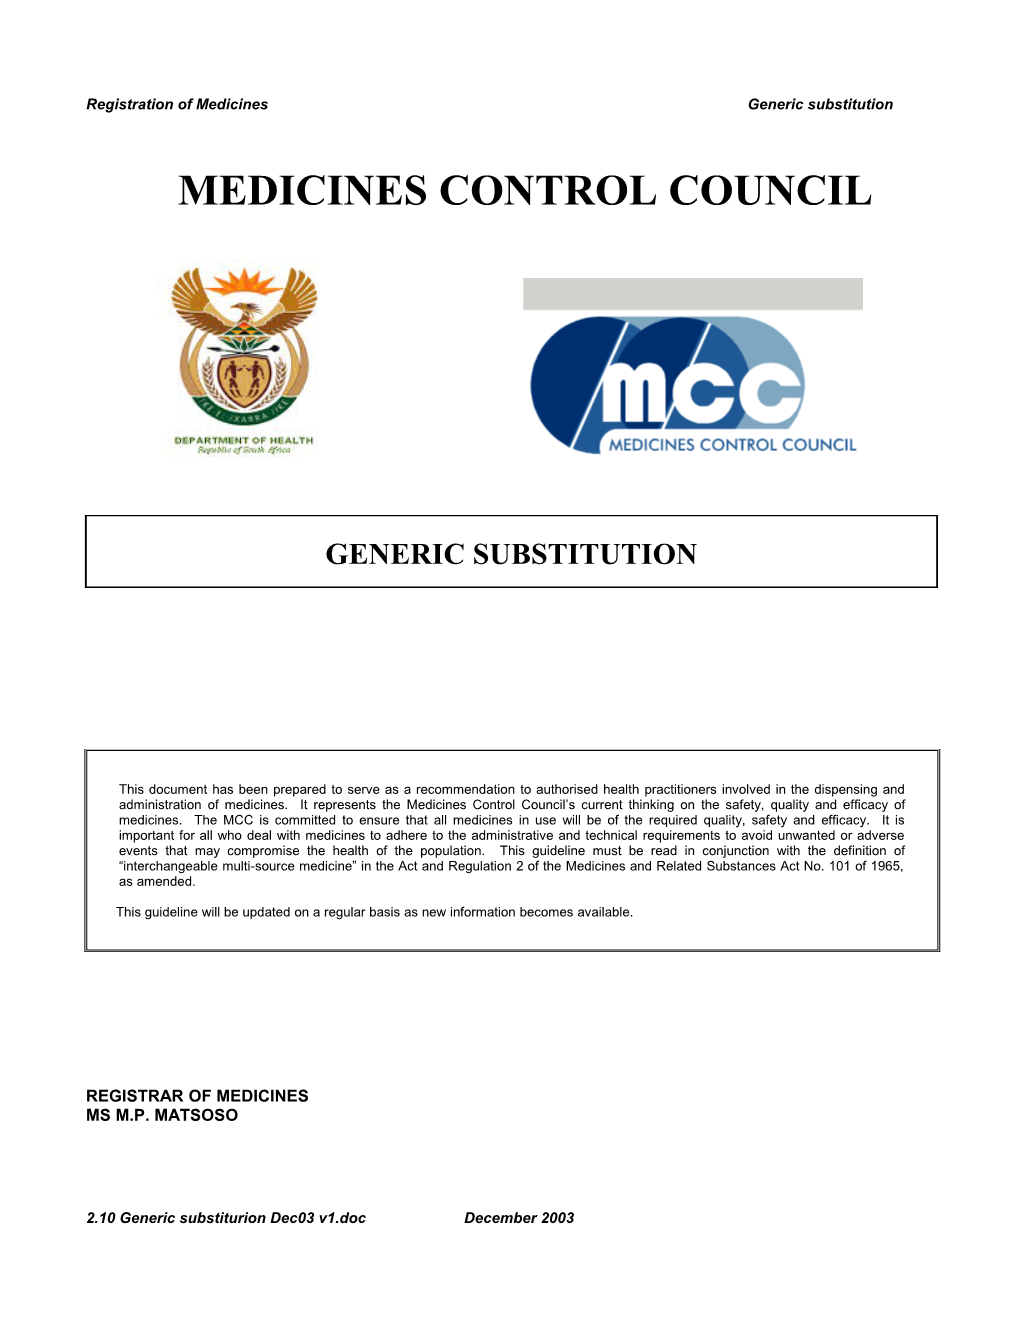 Registration of Medicines Generic Substitution